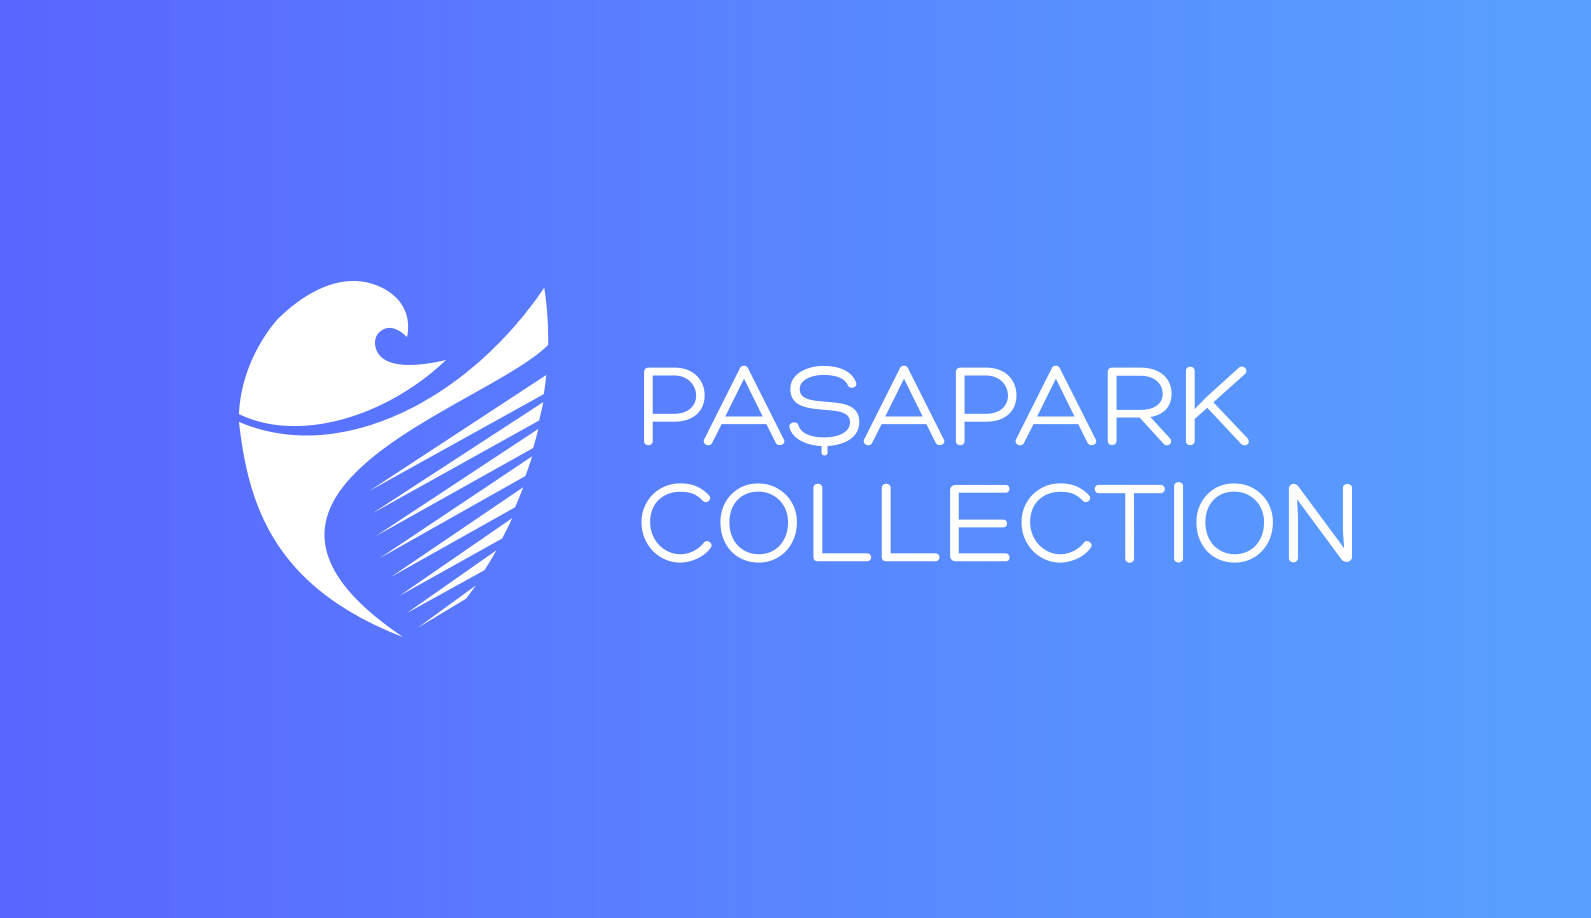 Paşapark Collection